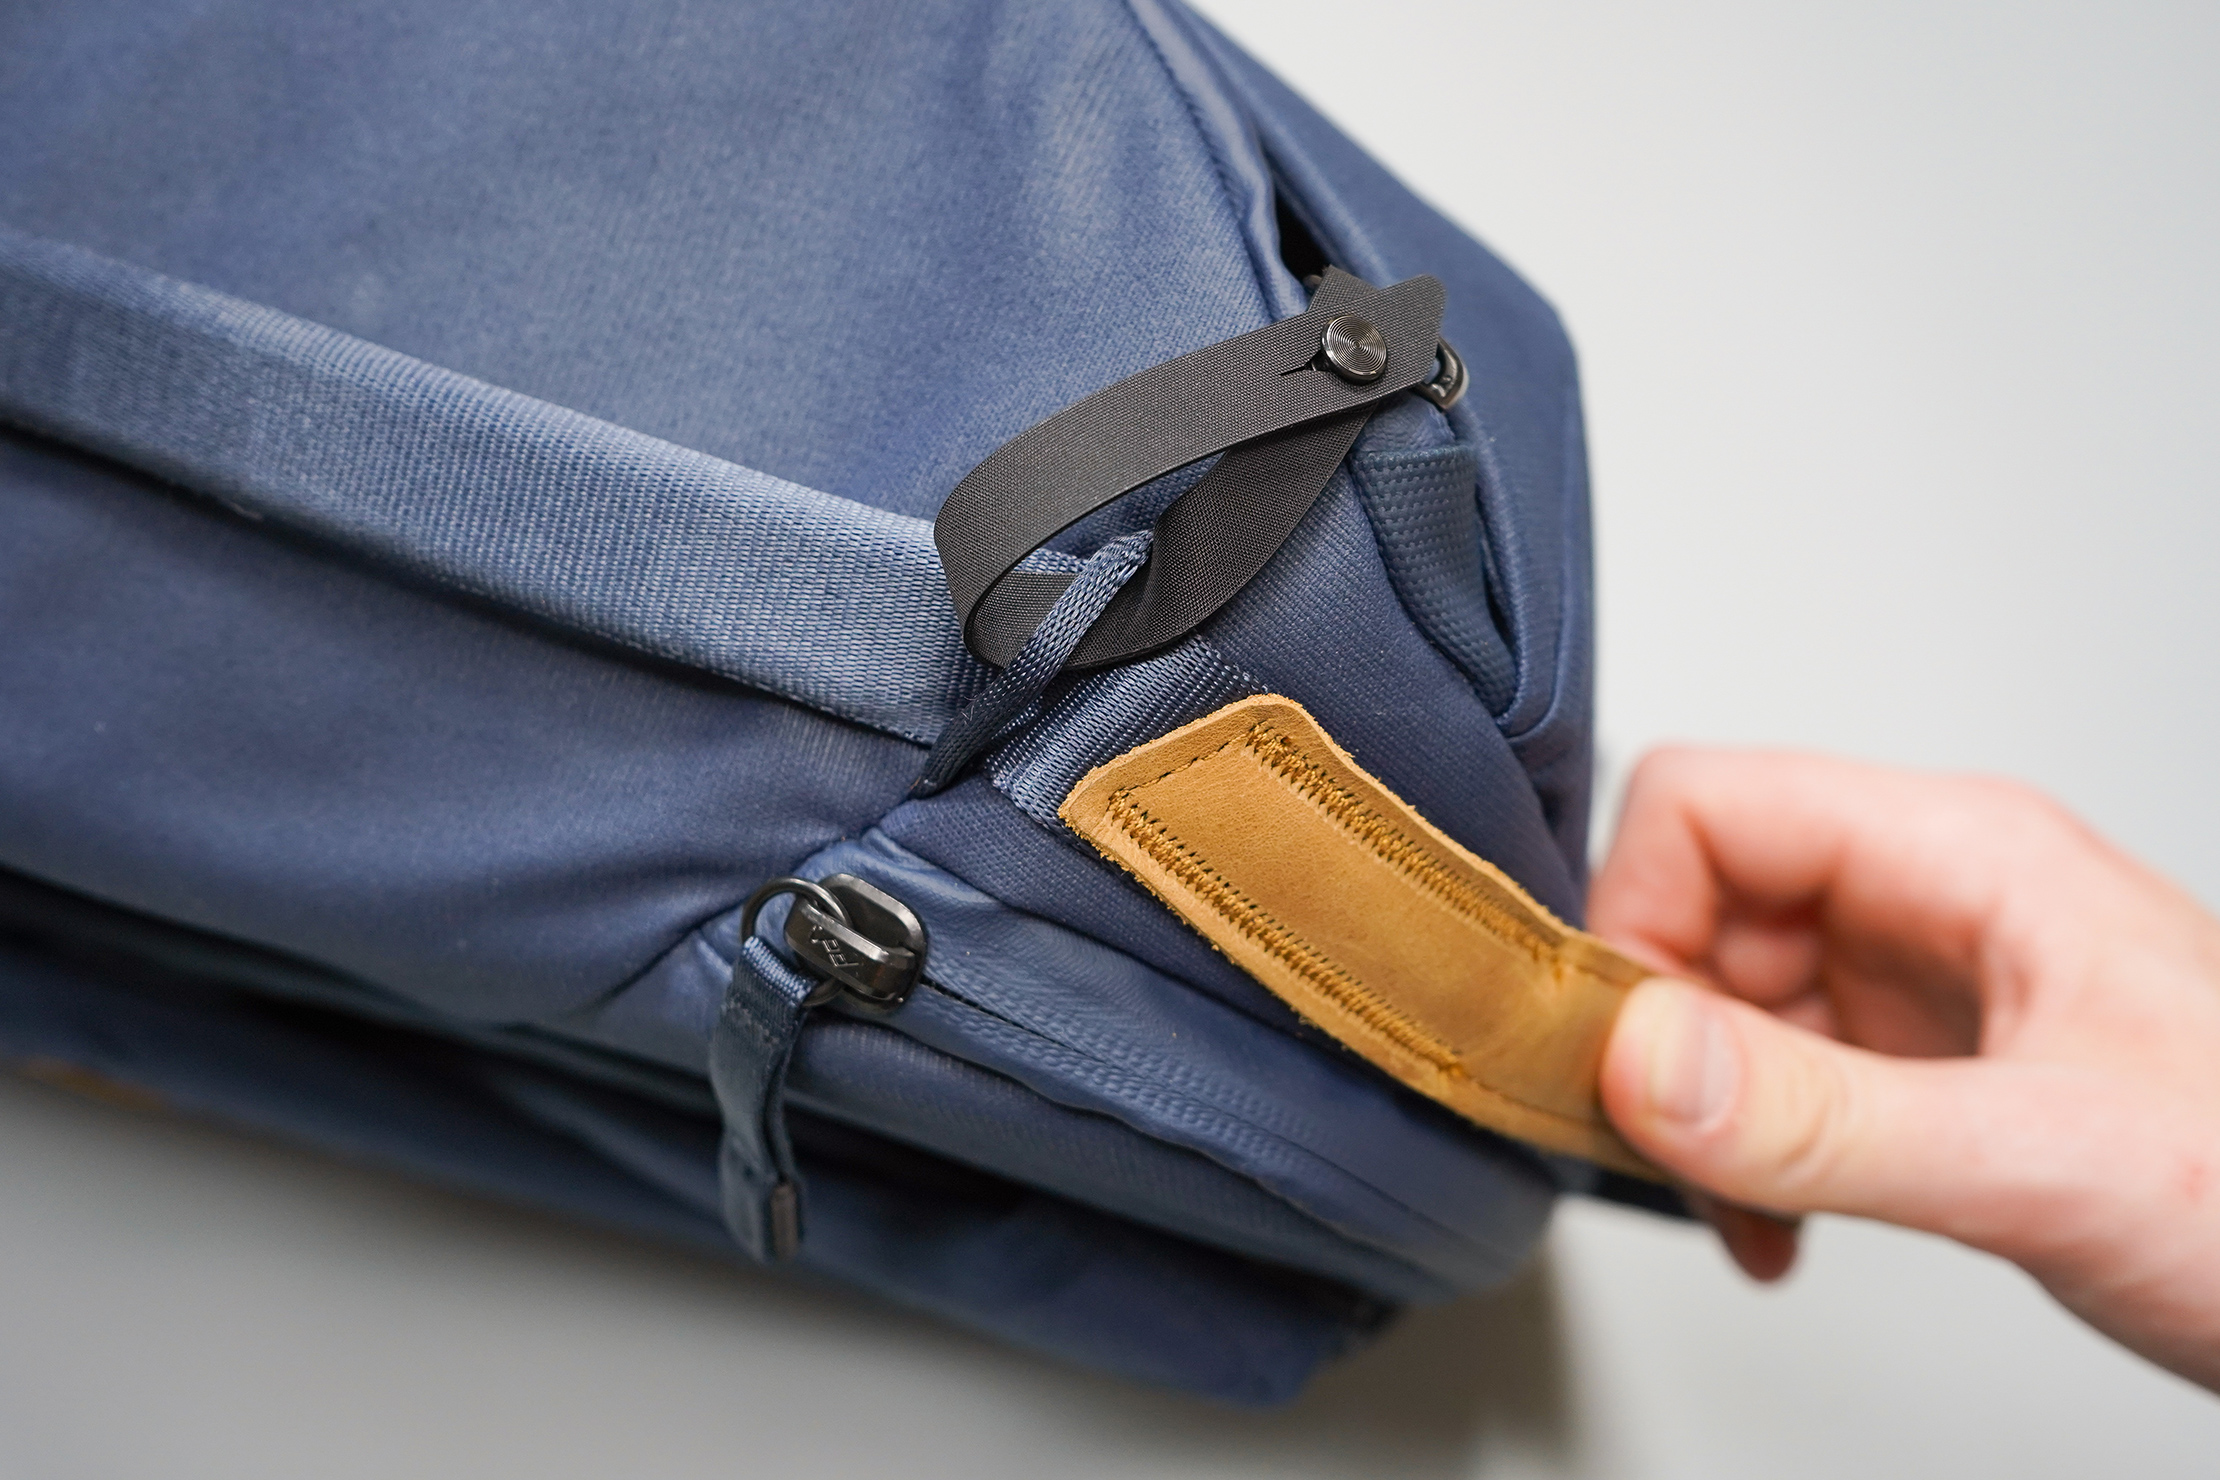 Peak Design Everyday Backpack 30L (V2) Locked Zippers